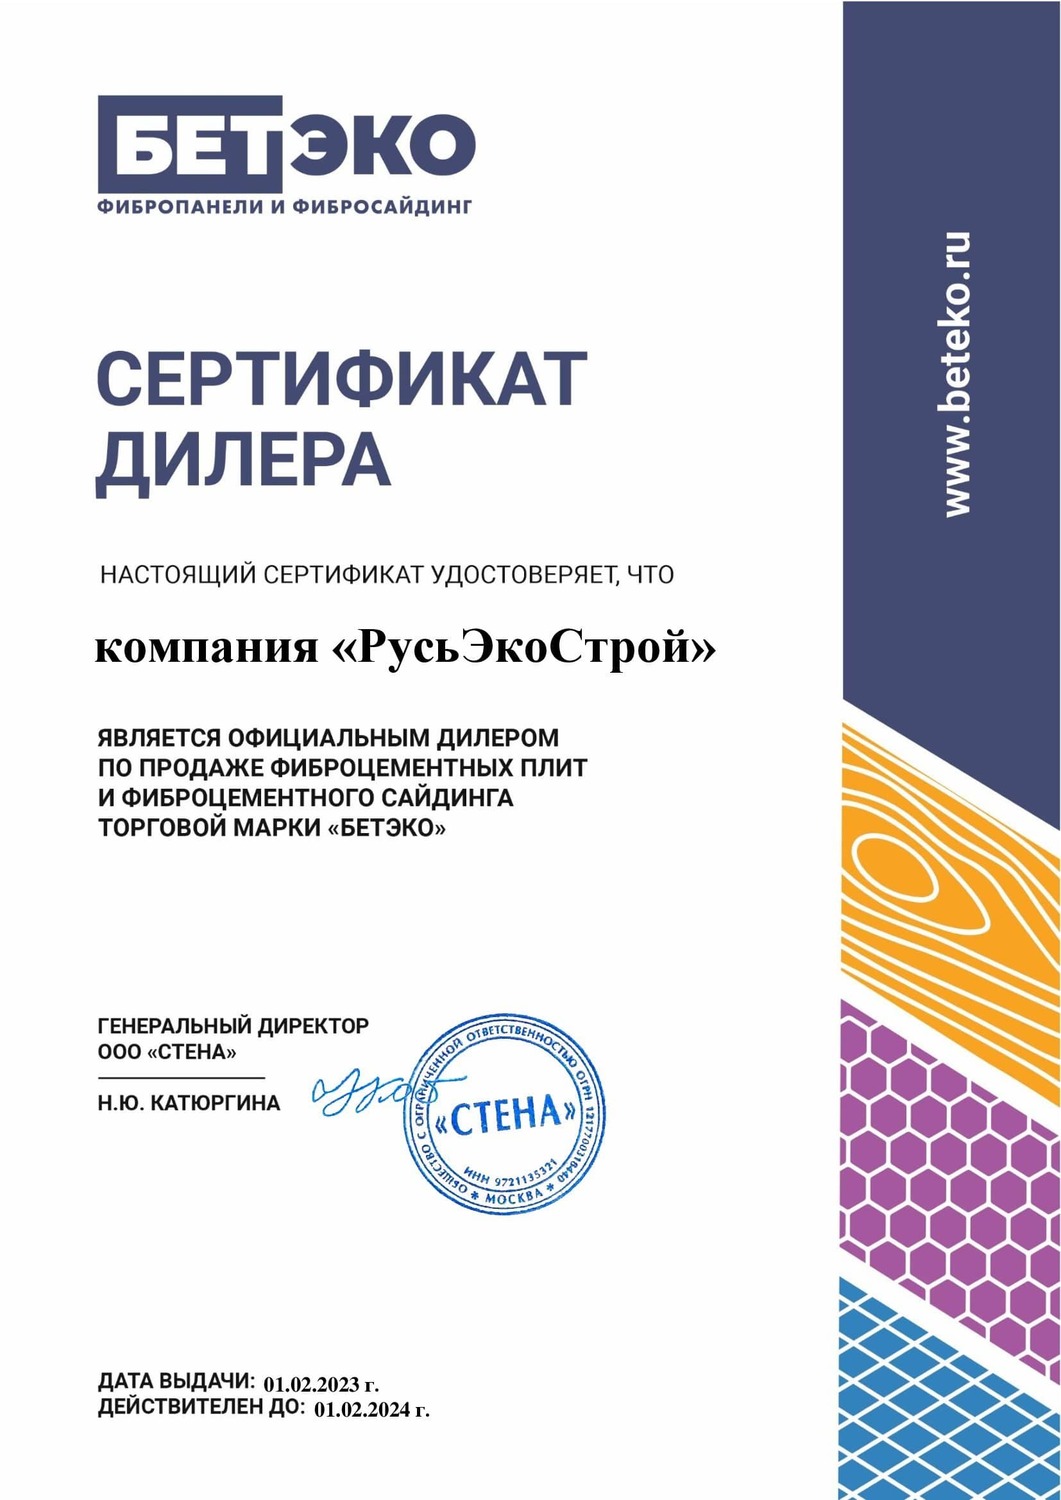 Сертификат дилера БЕТЭКО